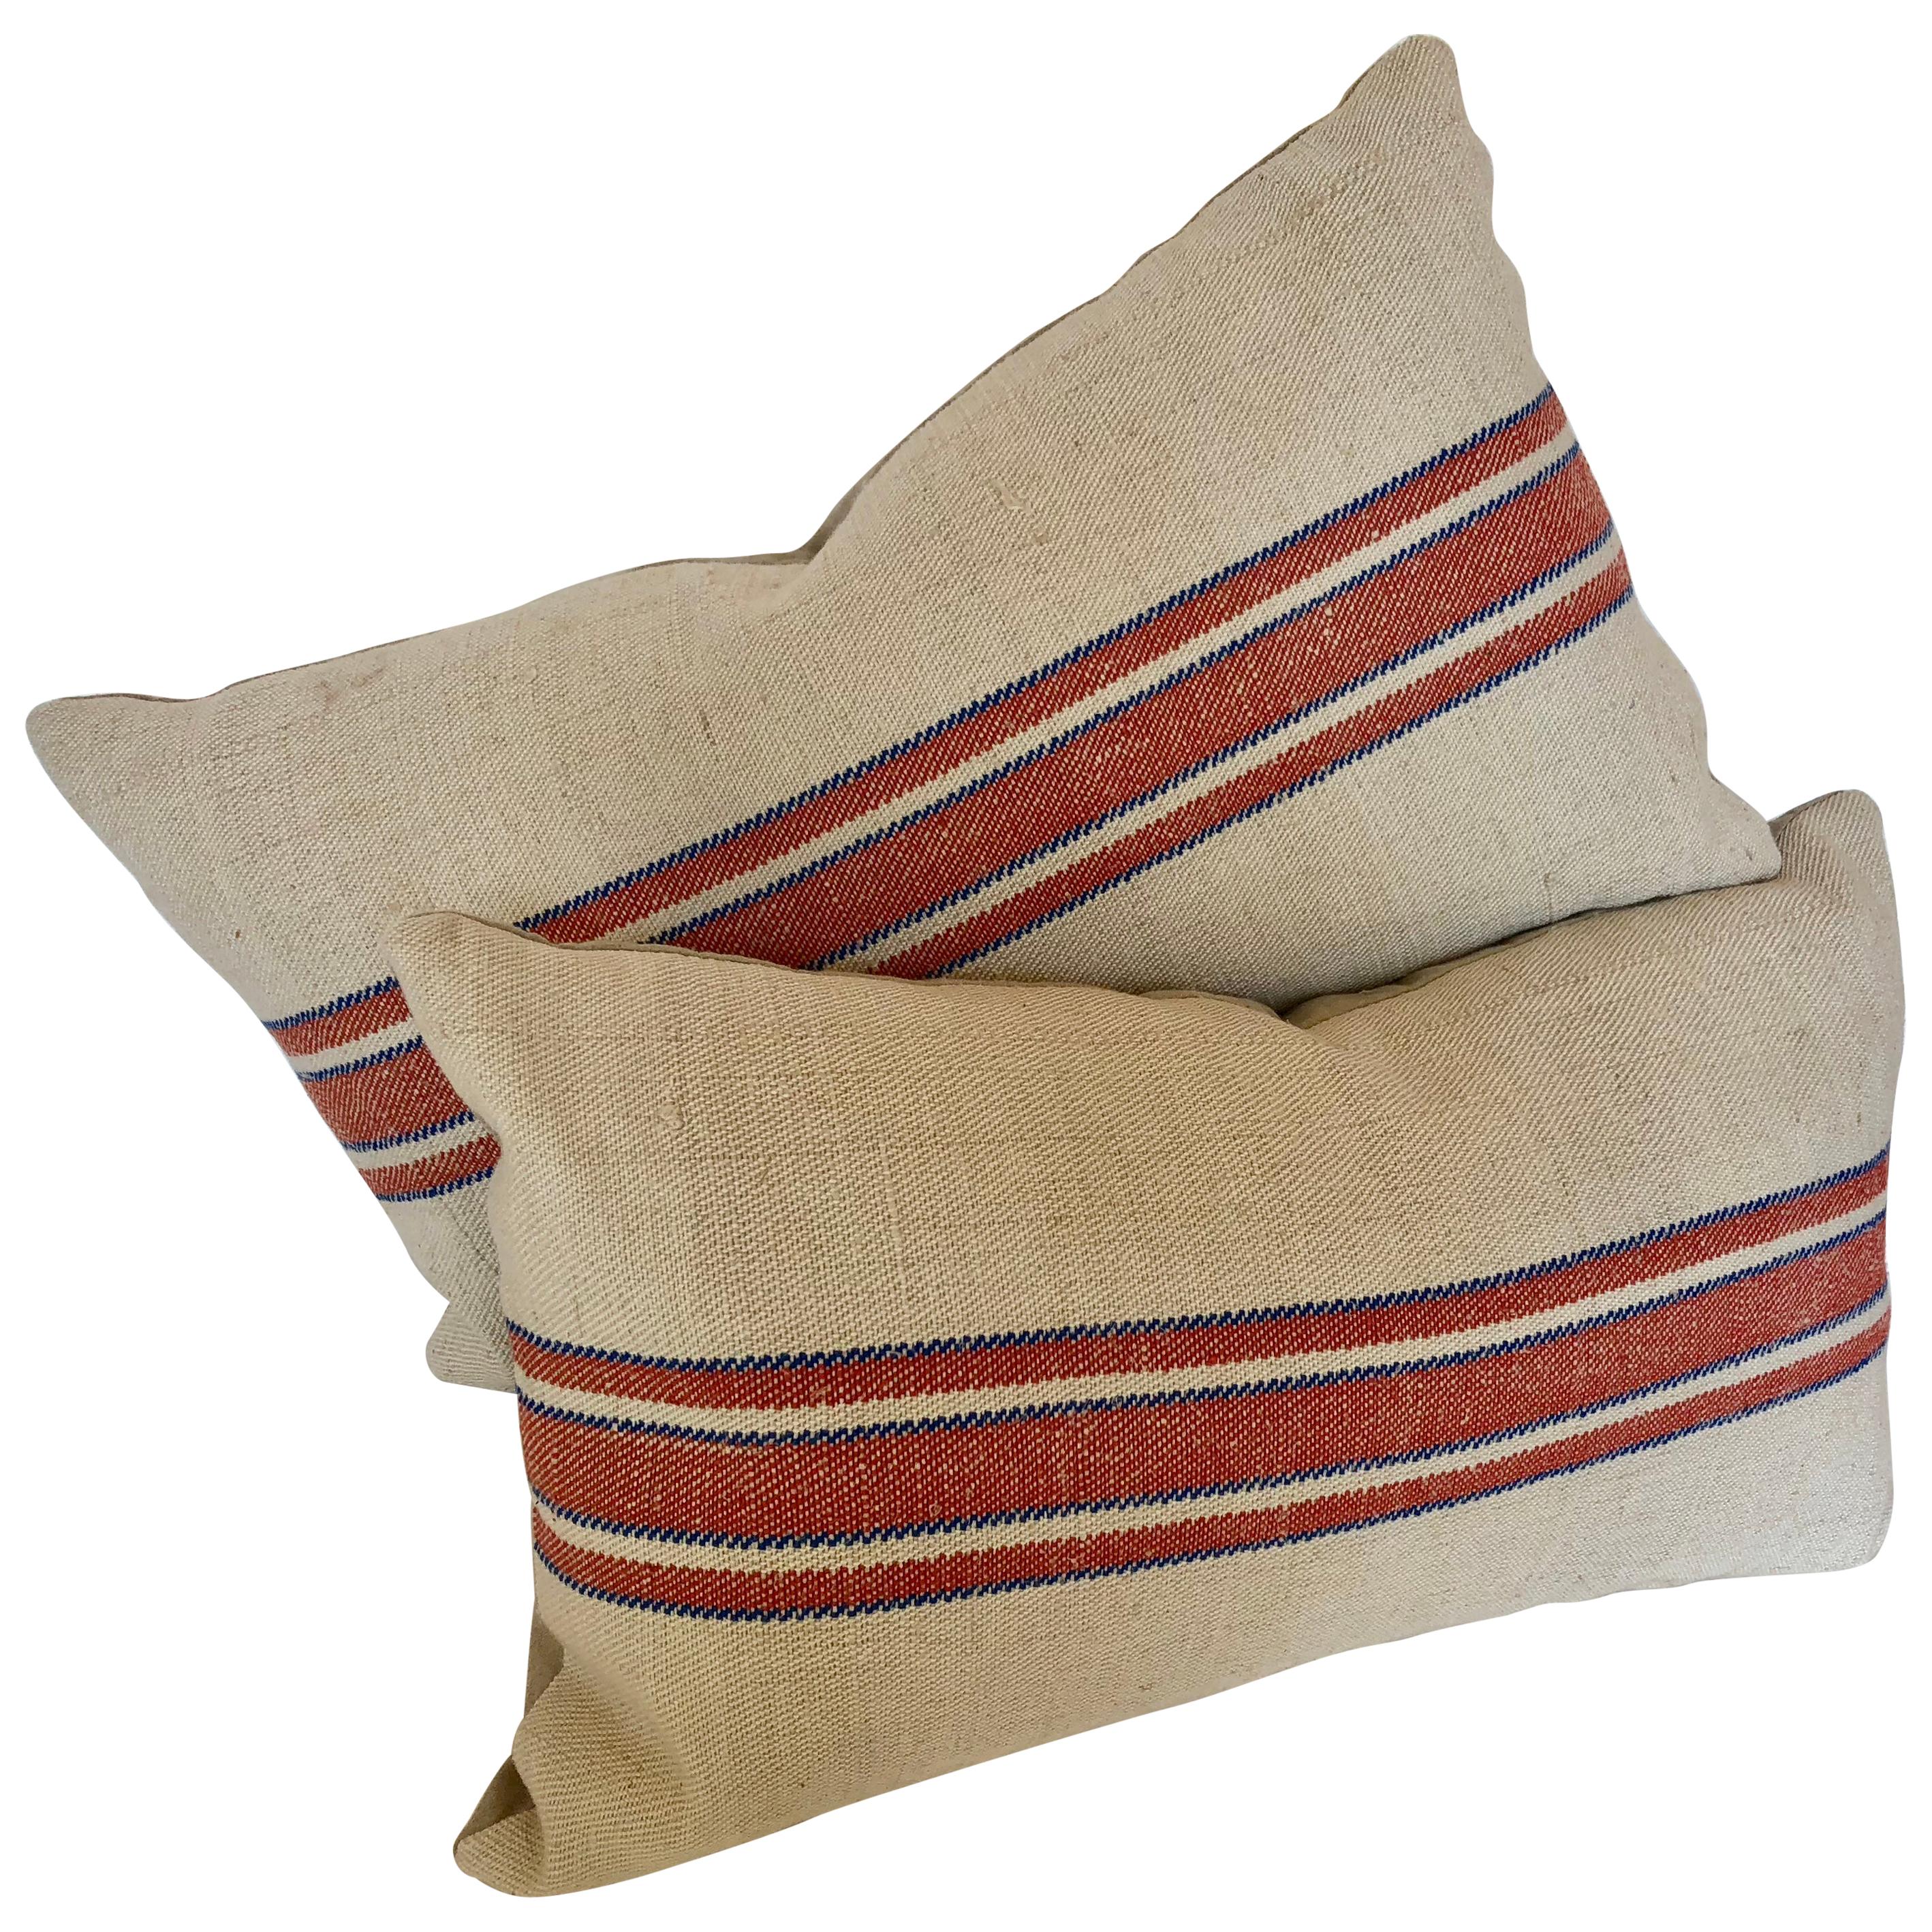 Custom Pillows Cut from a Vintage Handloomed Hemp and Linen German Grainsack For Sale